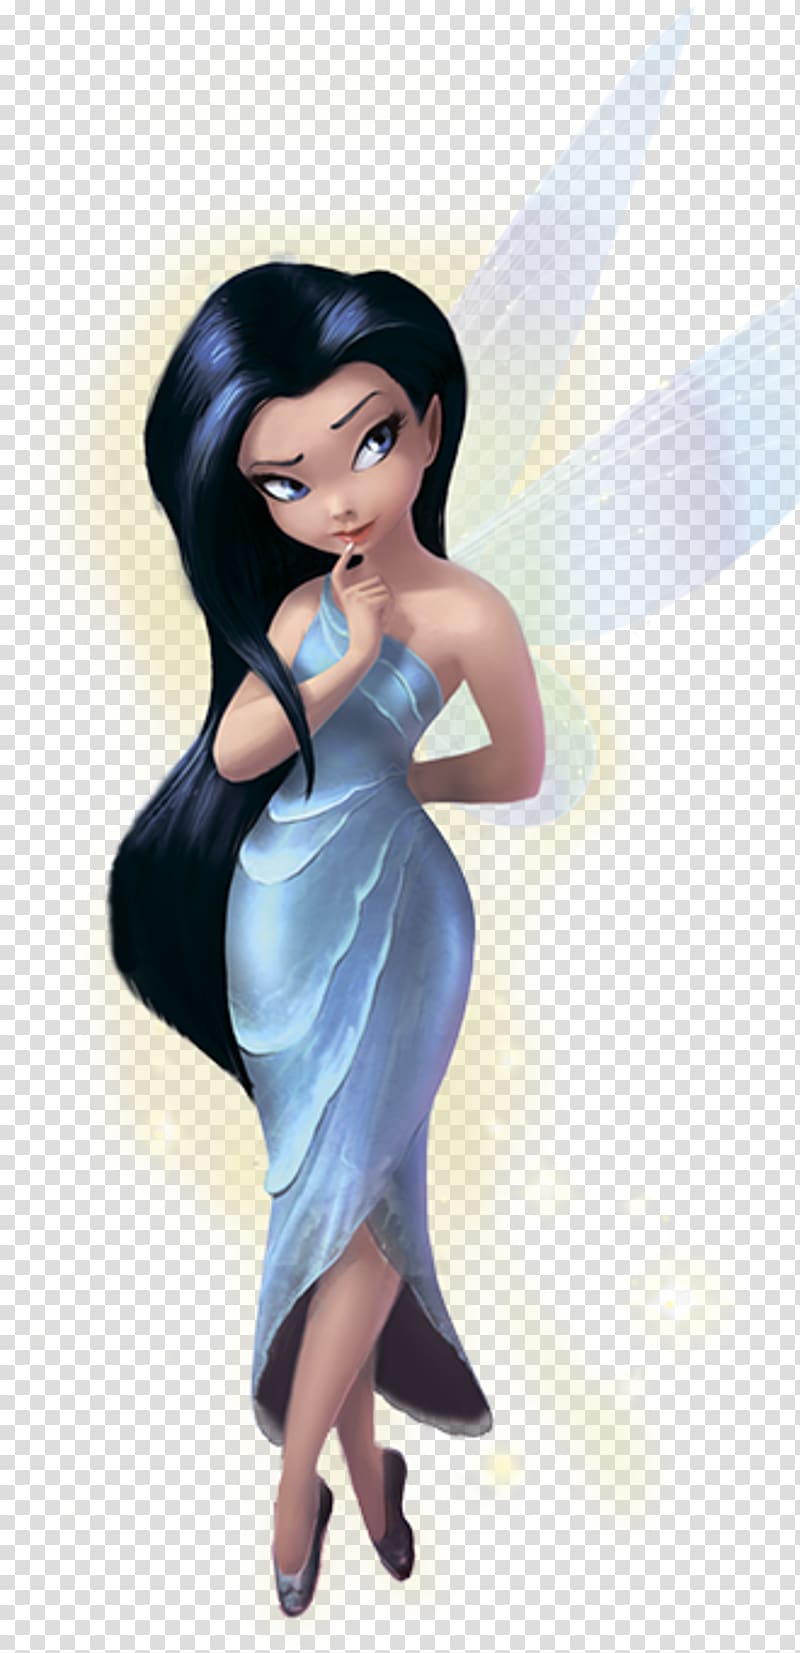 Disney Fairies Tinker Bell Silvermist Vidia Iridessa, Fairy transparent background PNG clipart